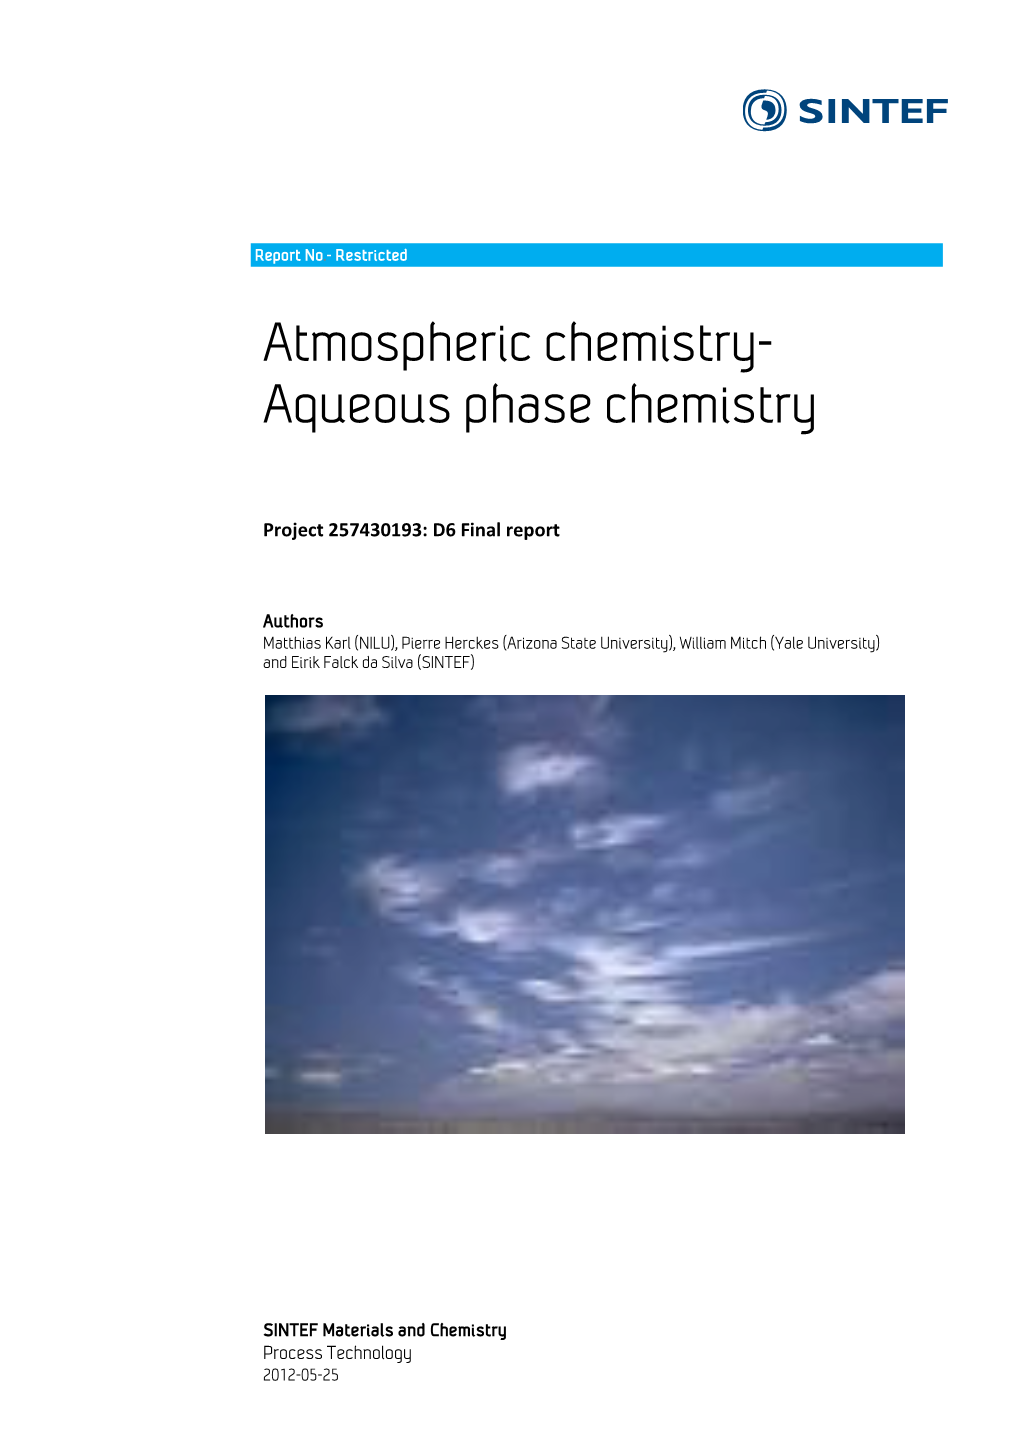 Atmospheric Chemistry- Aqueous Phase Chemistry